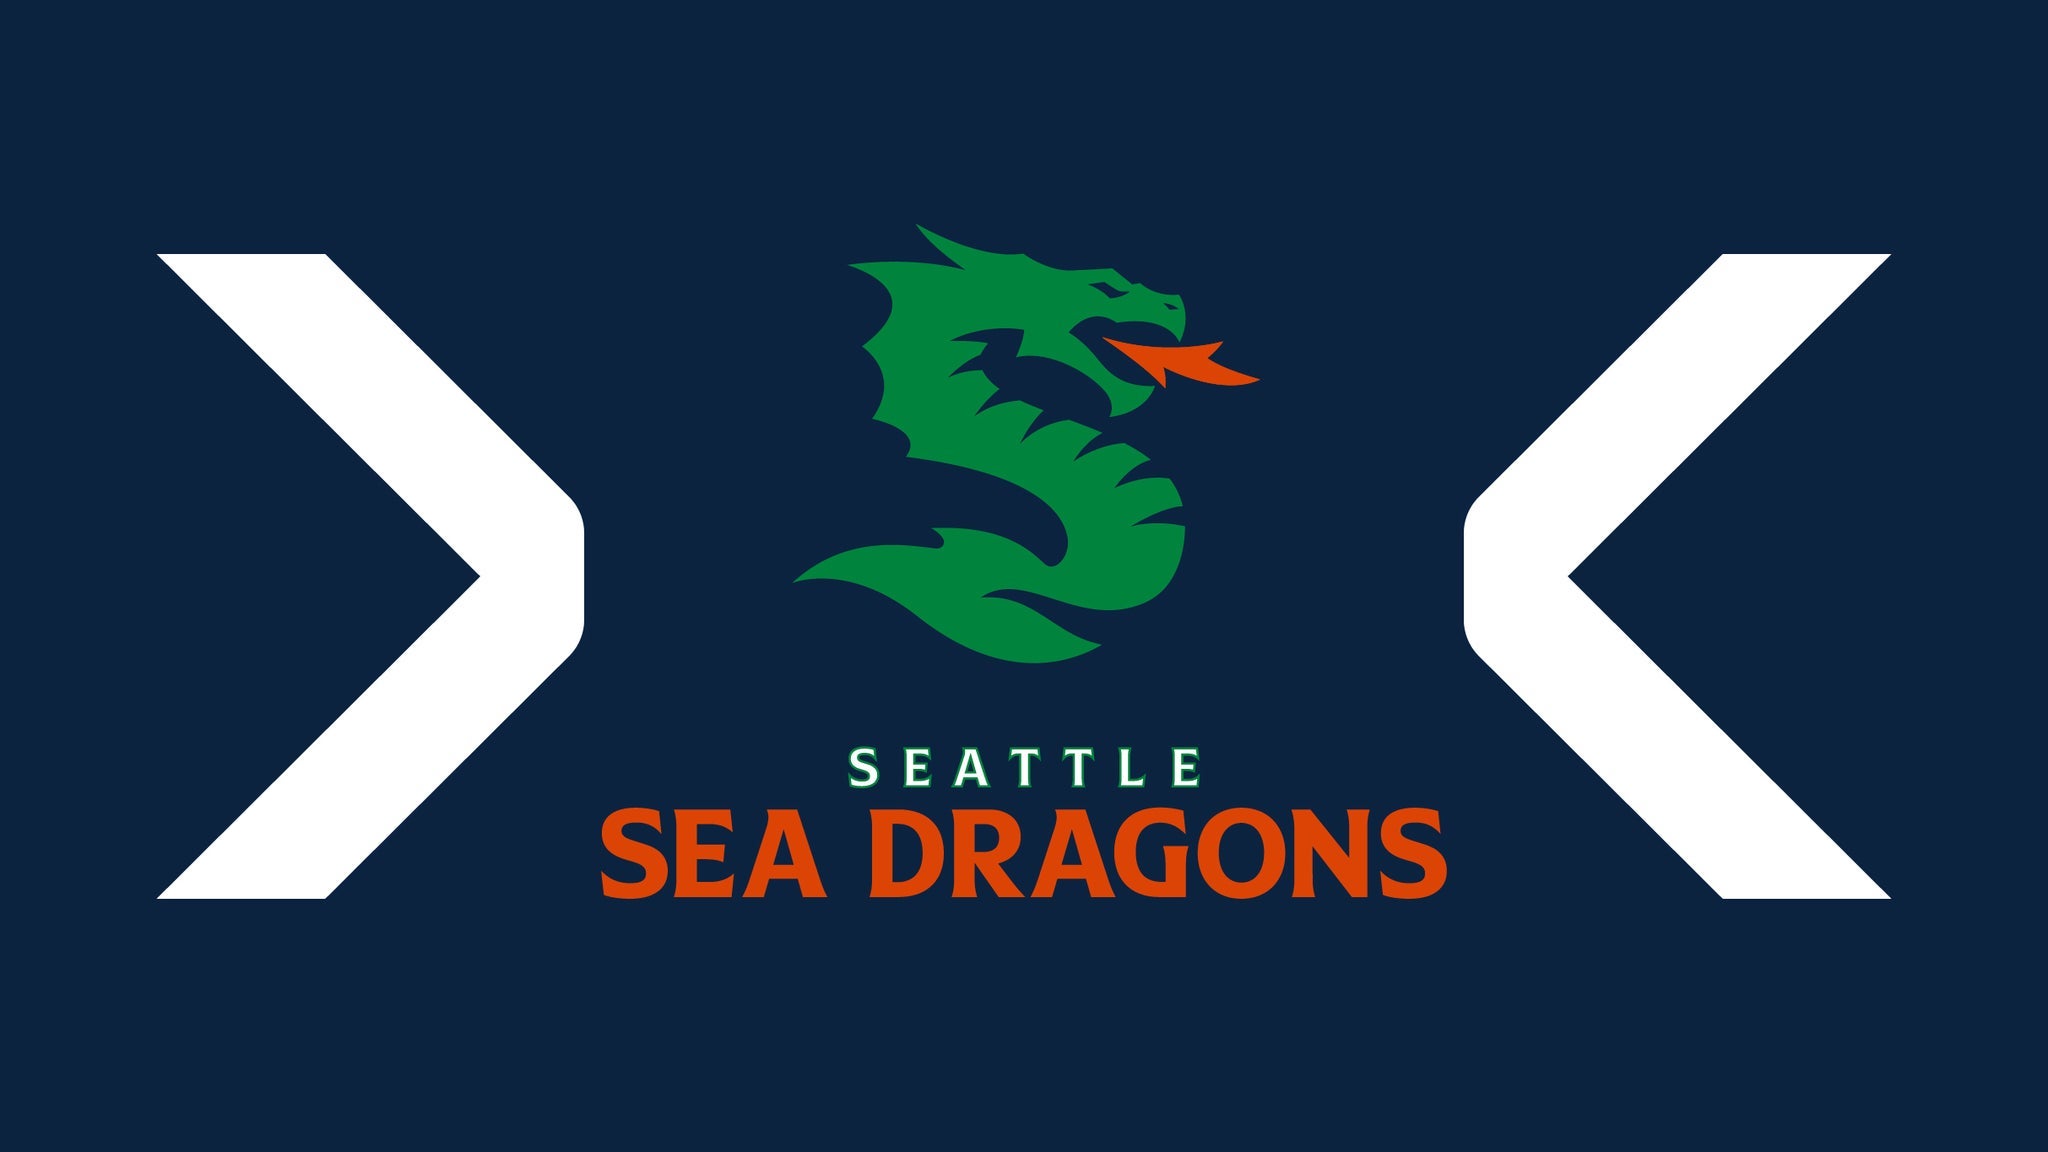 Seattle Sea Dragons